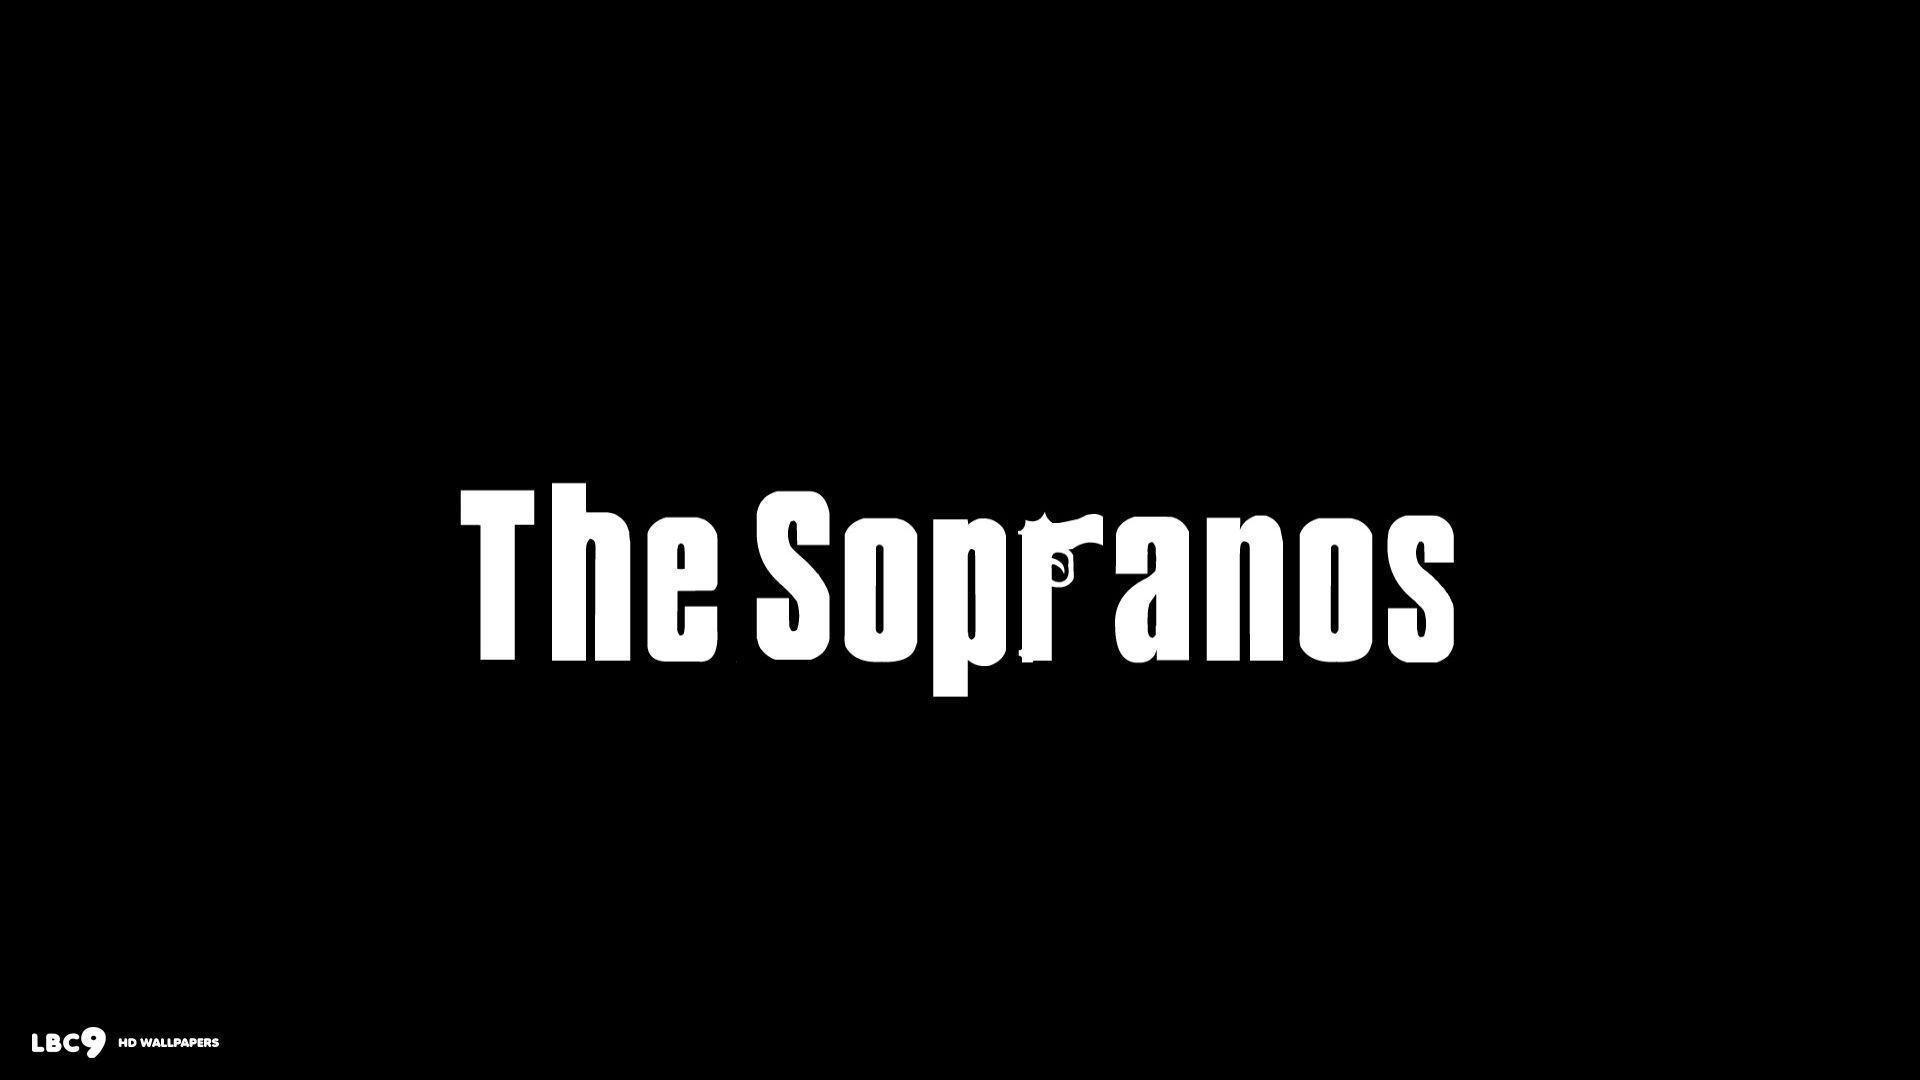 Sopranos wallpapers |